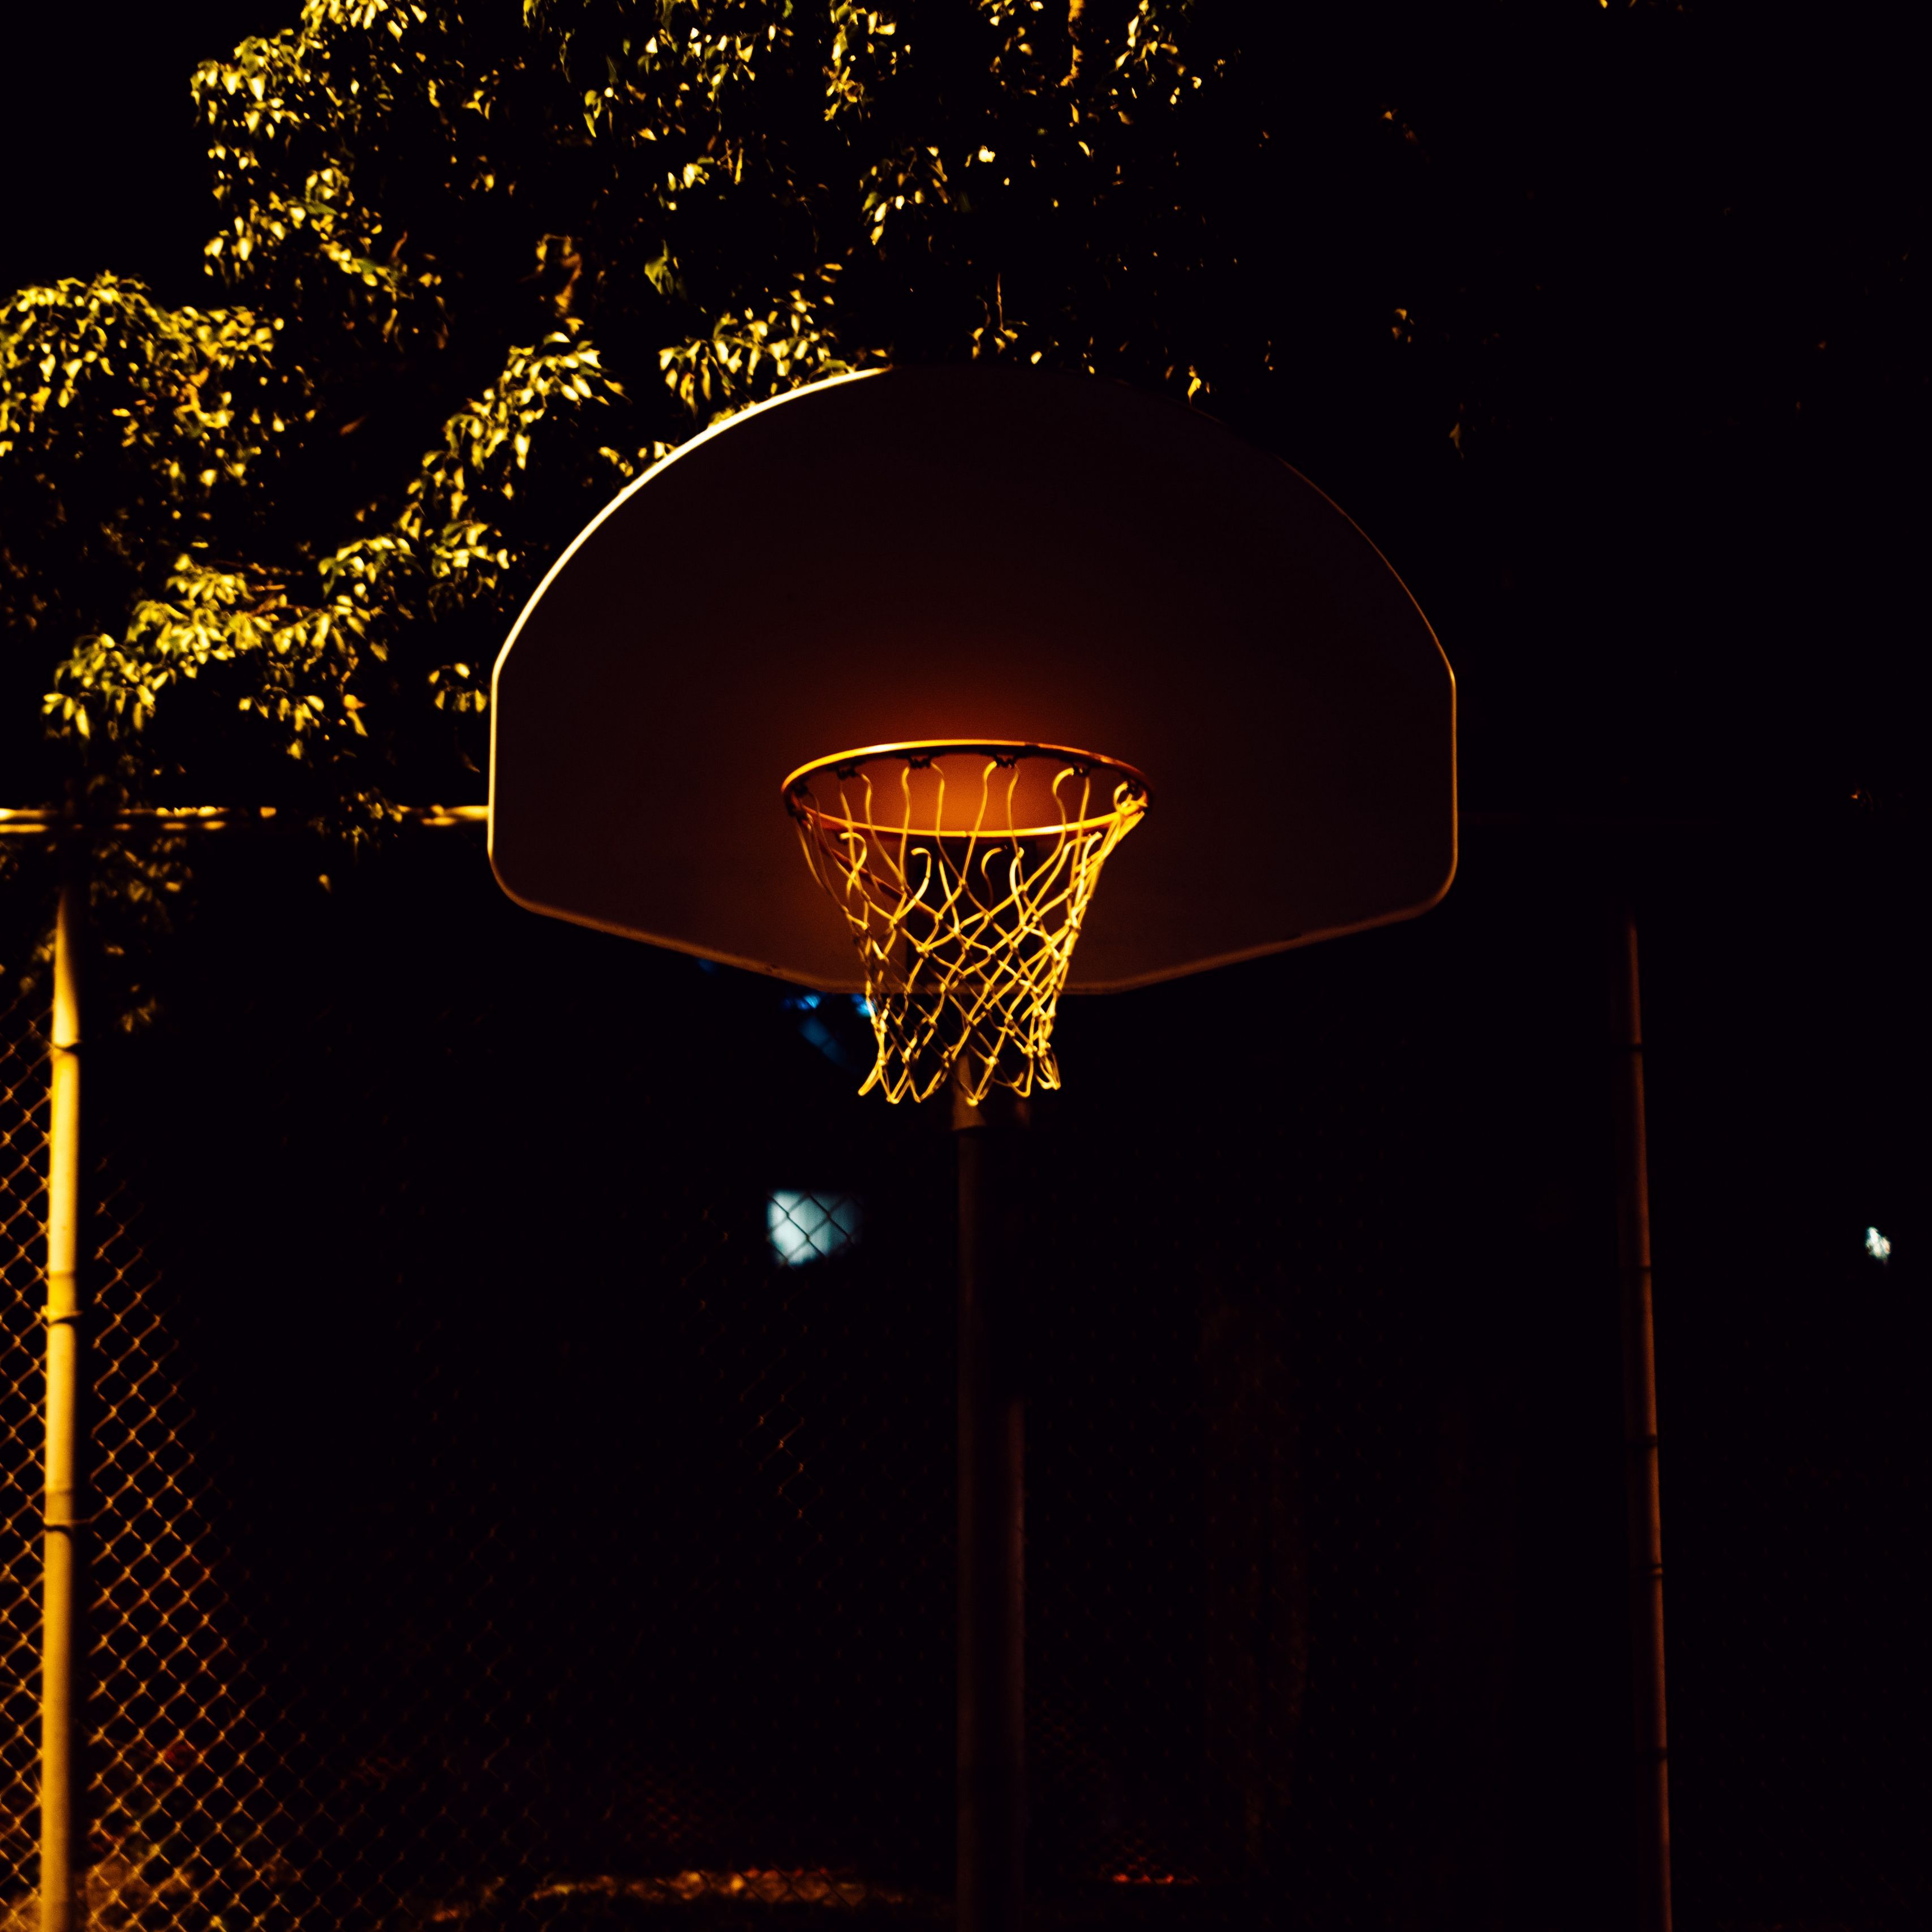 Download wallpaper 3415x3415 basketball, basketball hoop, basketball net, shadows, night ipad pro 12.9 retina for parallax HD background